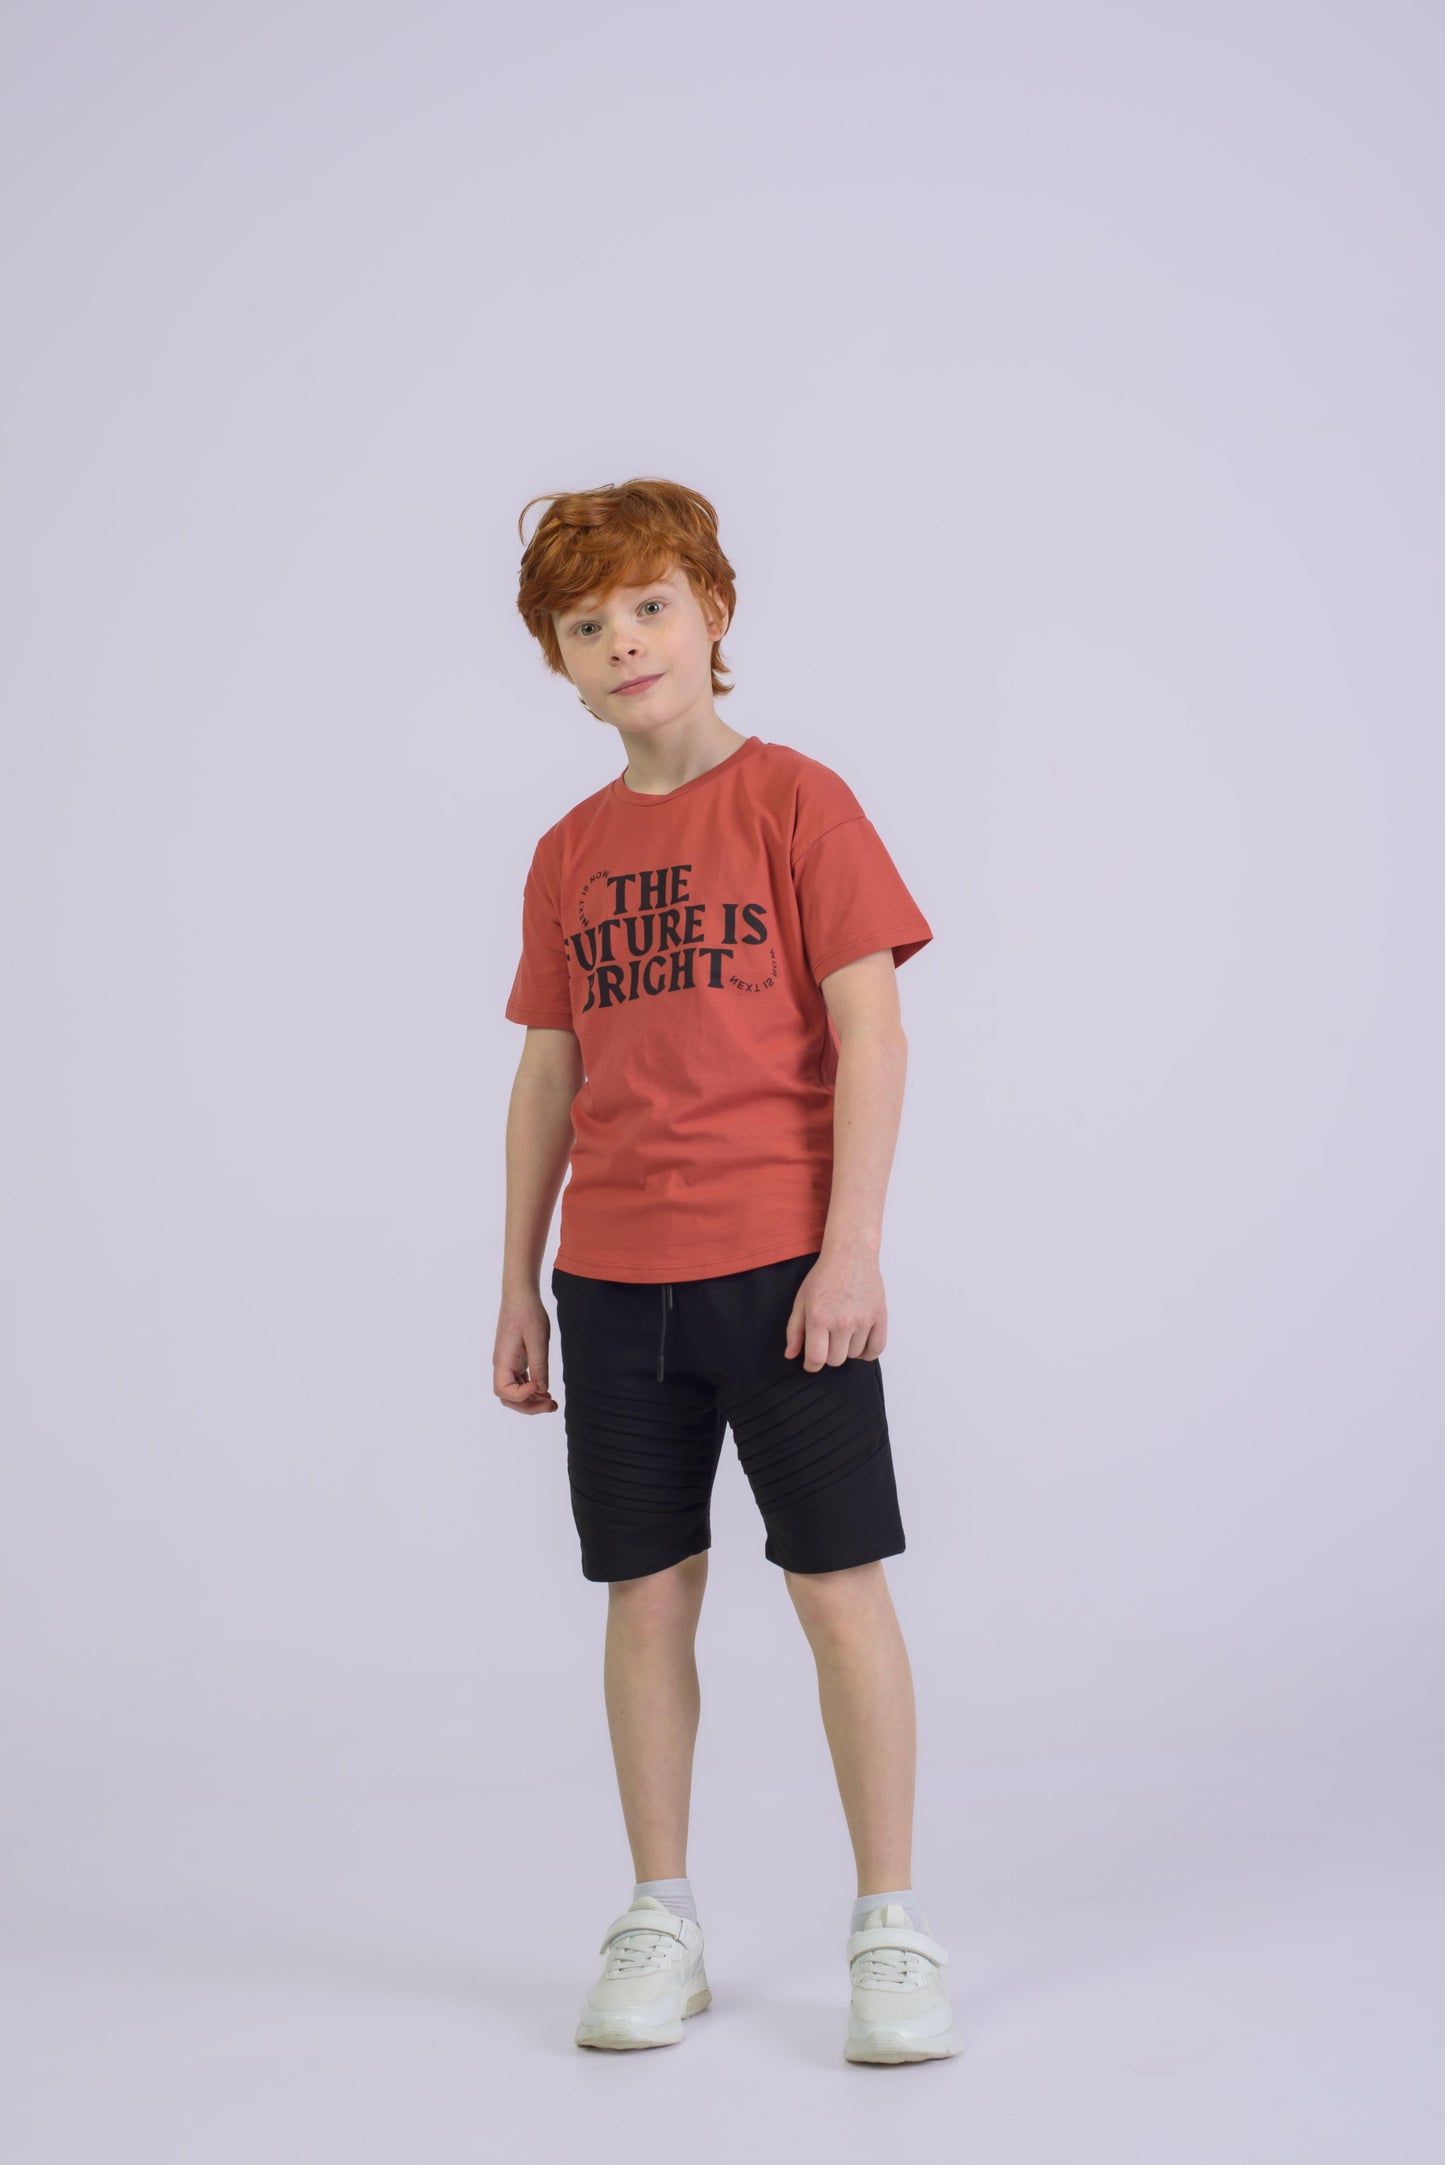 Children's Unisex 100% Cotton Front Printed T-Shirt